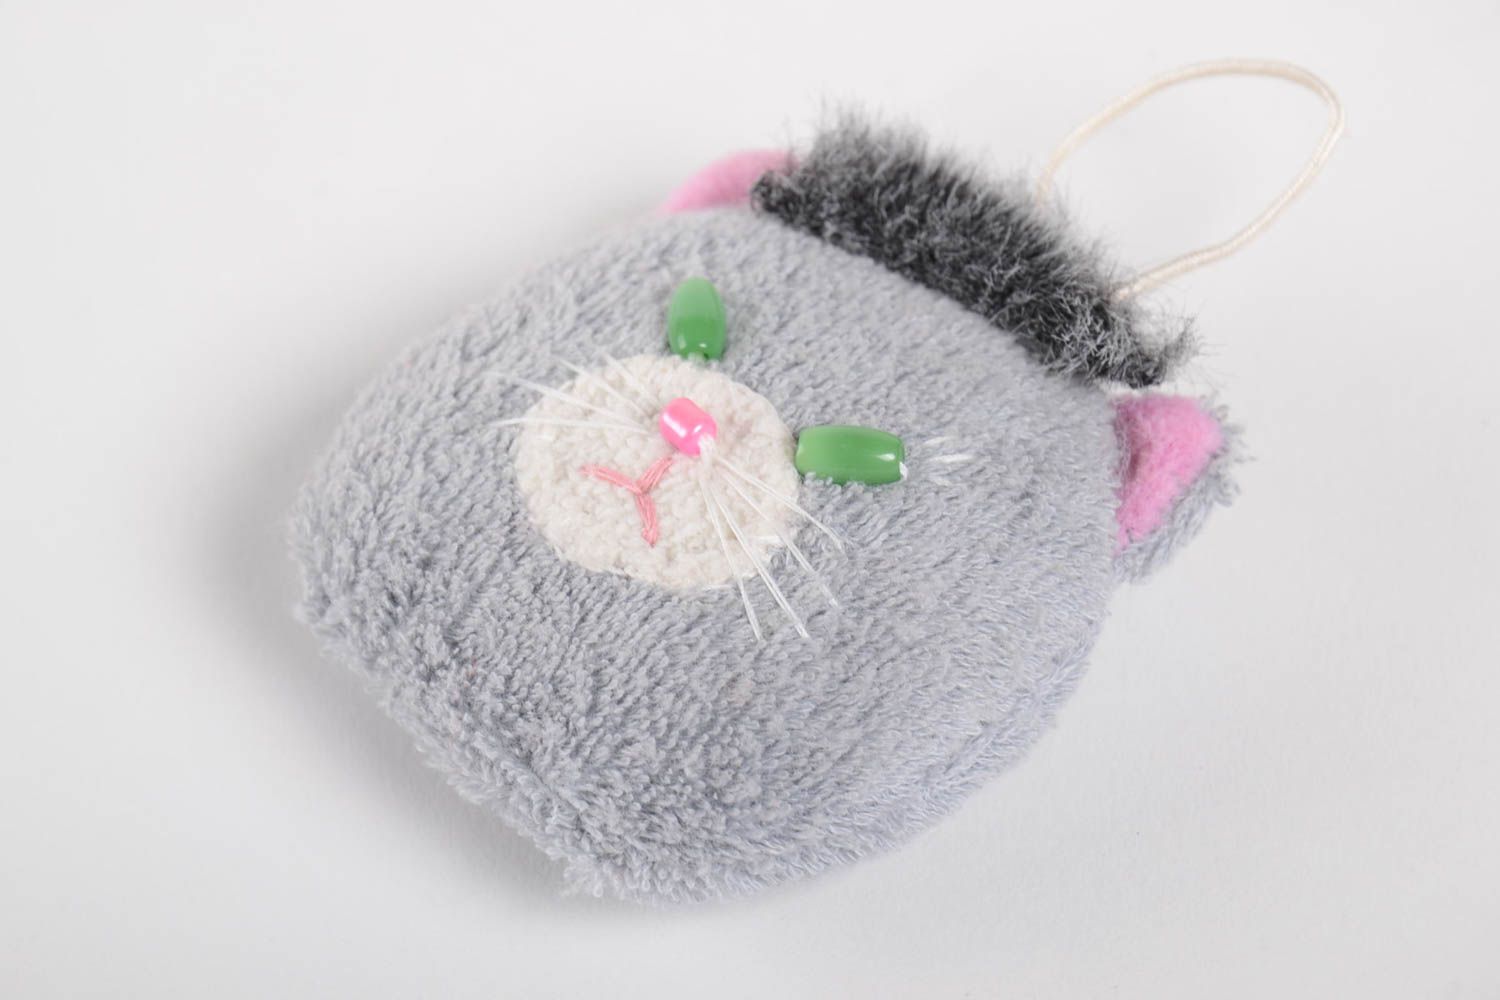 Handmade soft needle bed accessory in shape of cat stylish unusual pendant photo 5